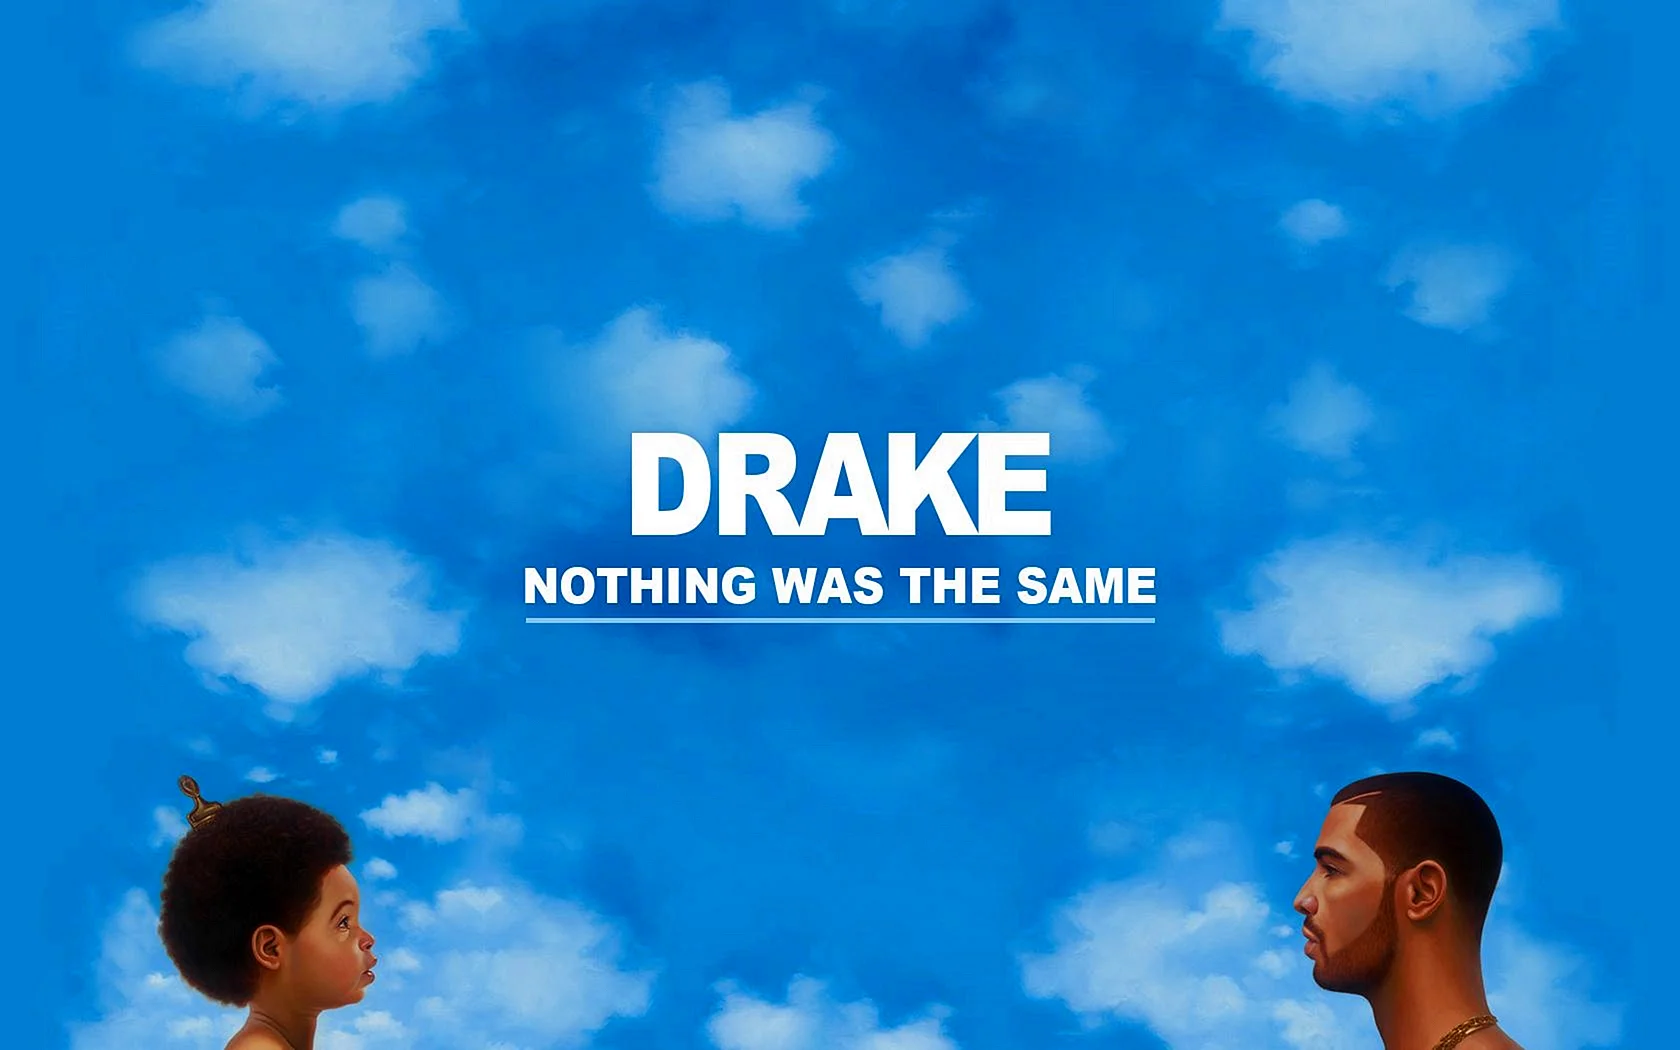 Nothing new песня. Nothing was the same Дрейк. Drake альбом. Drake обложка. Drake nothing was the same обложка.